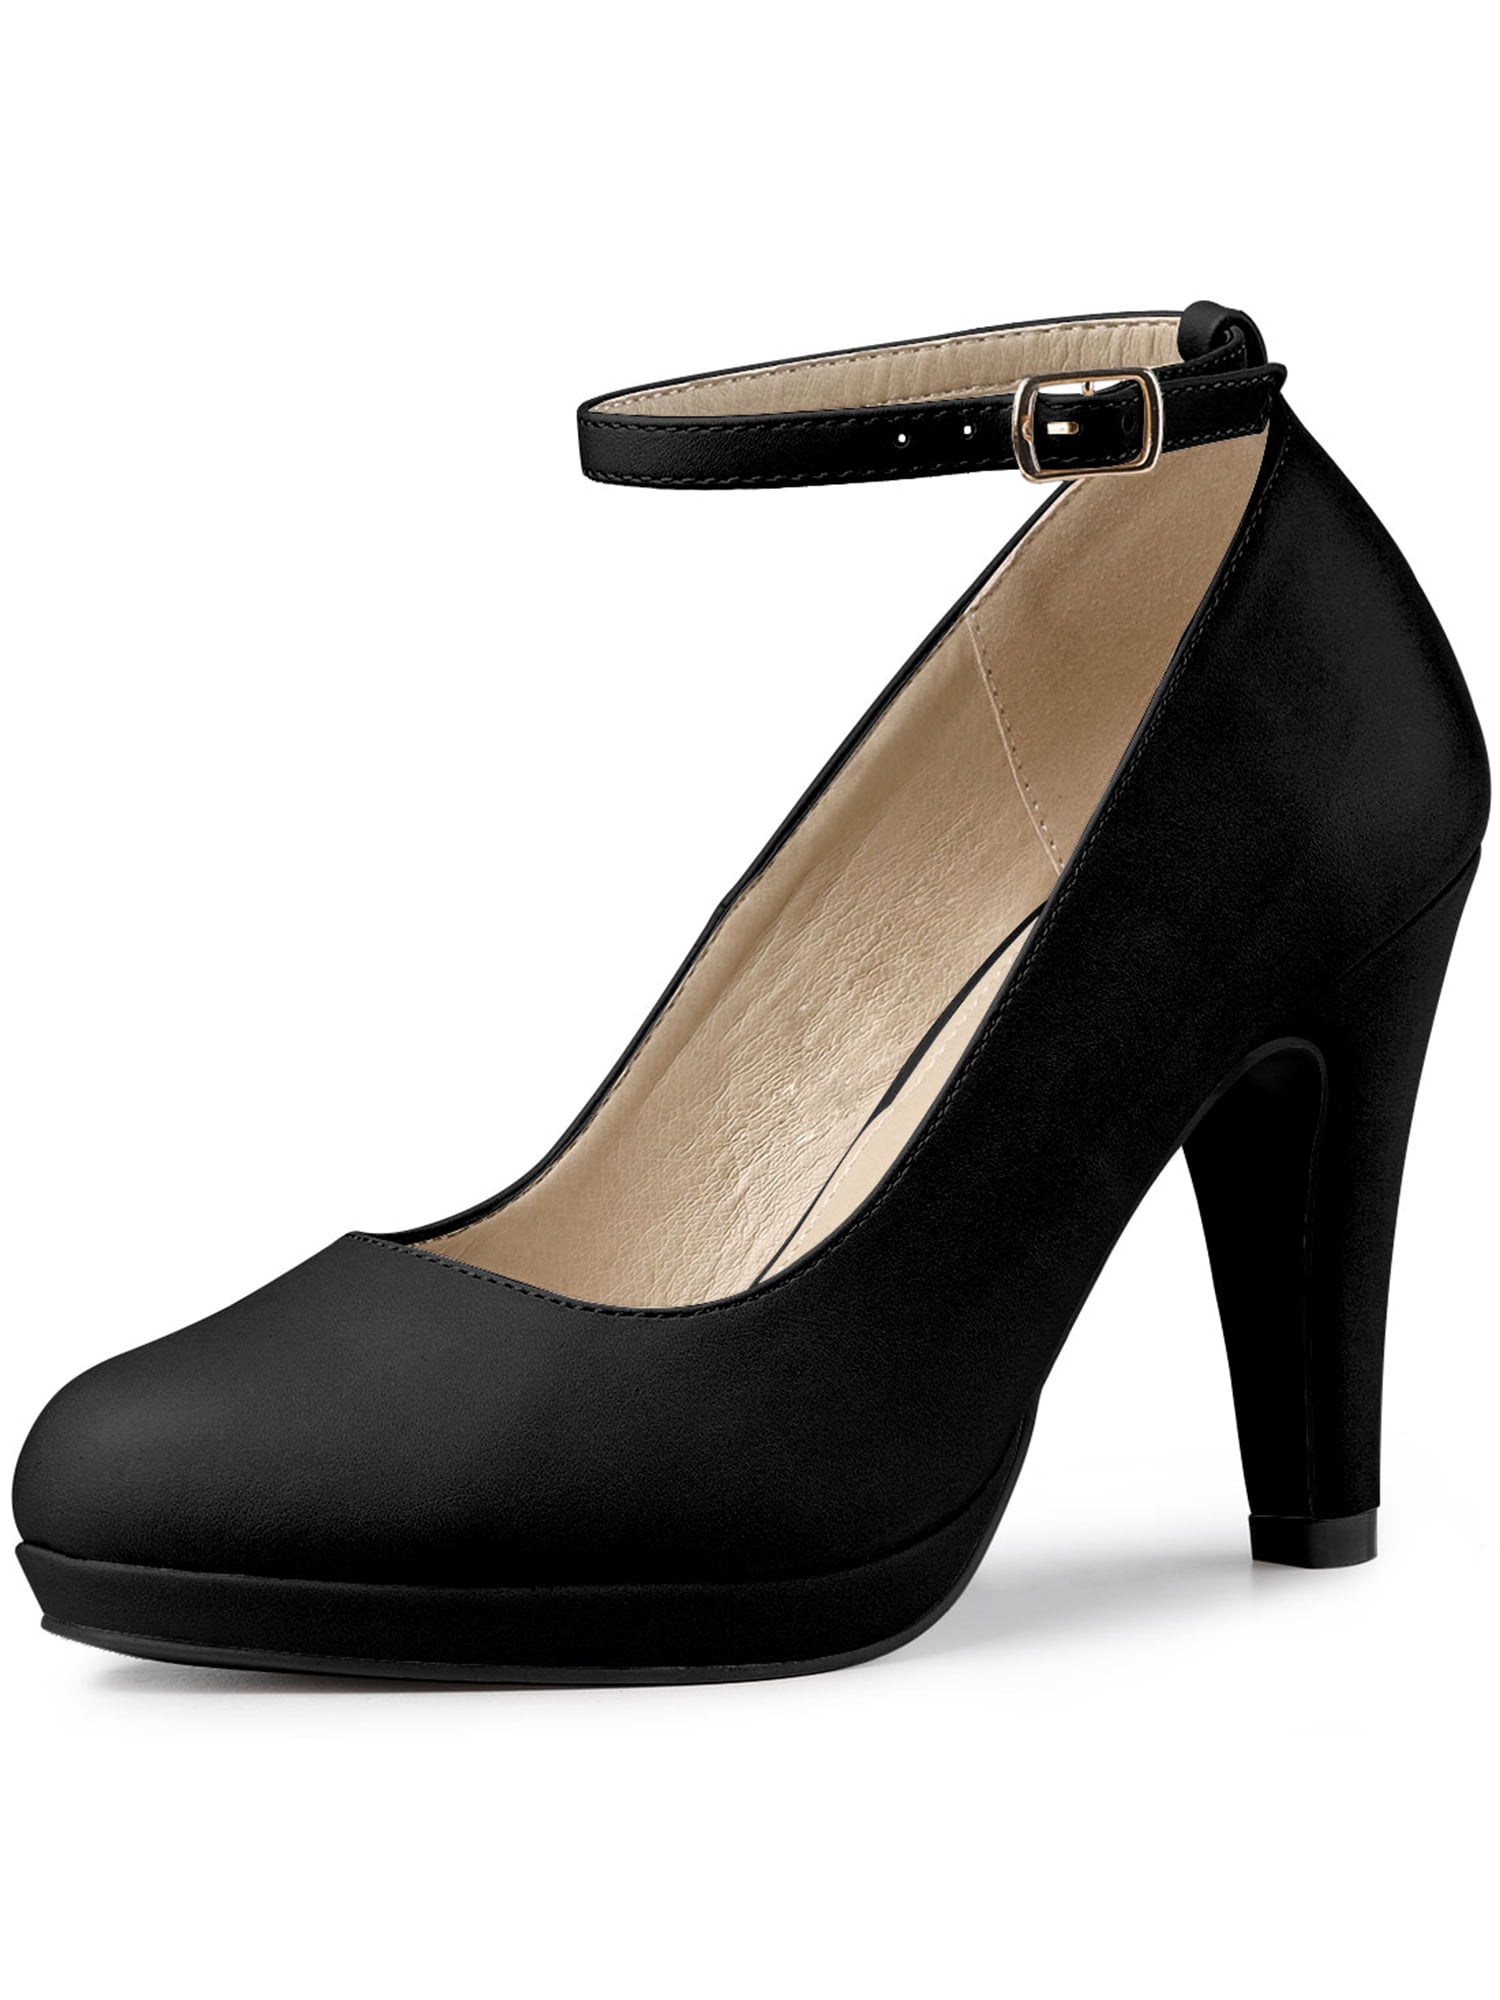 Women's Round Toe Stiletto High Heel Ankle Strap Pumps Black (Size 6.5